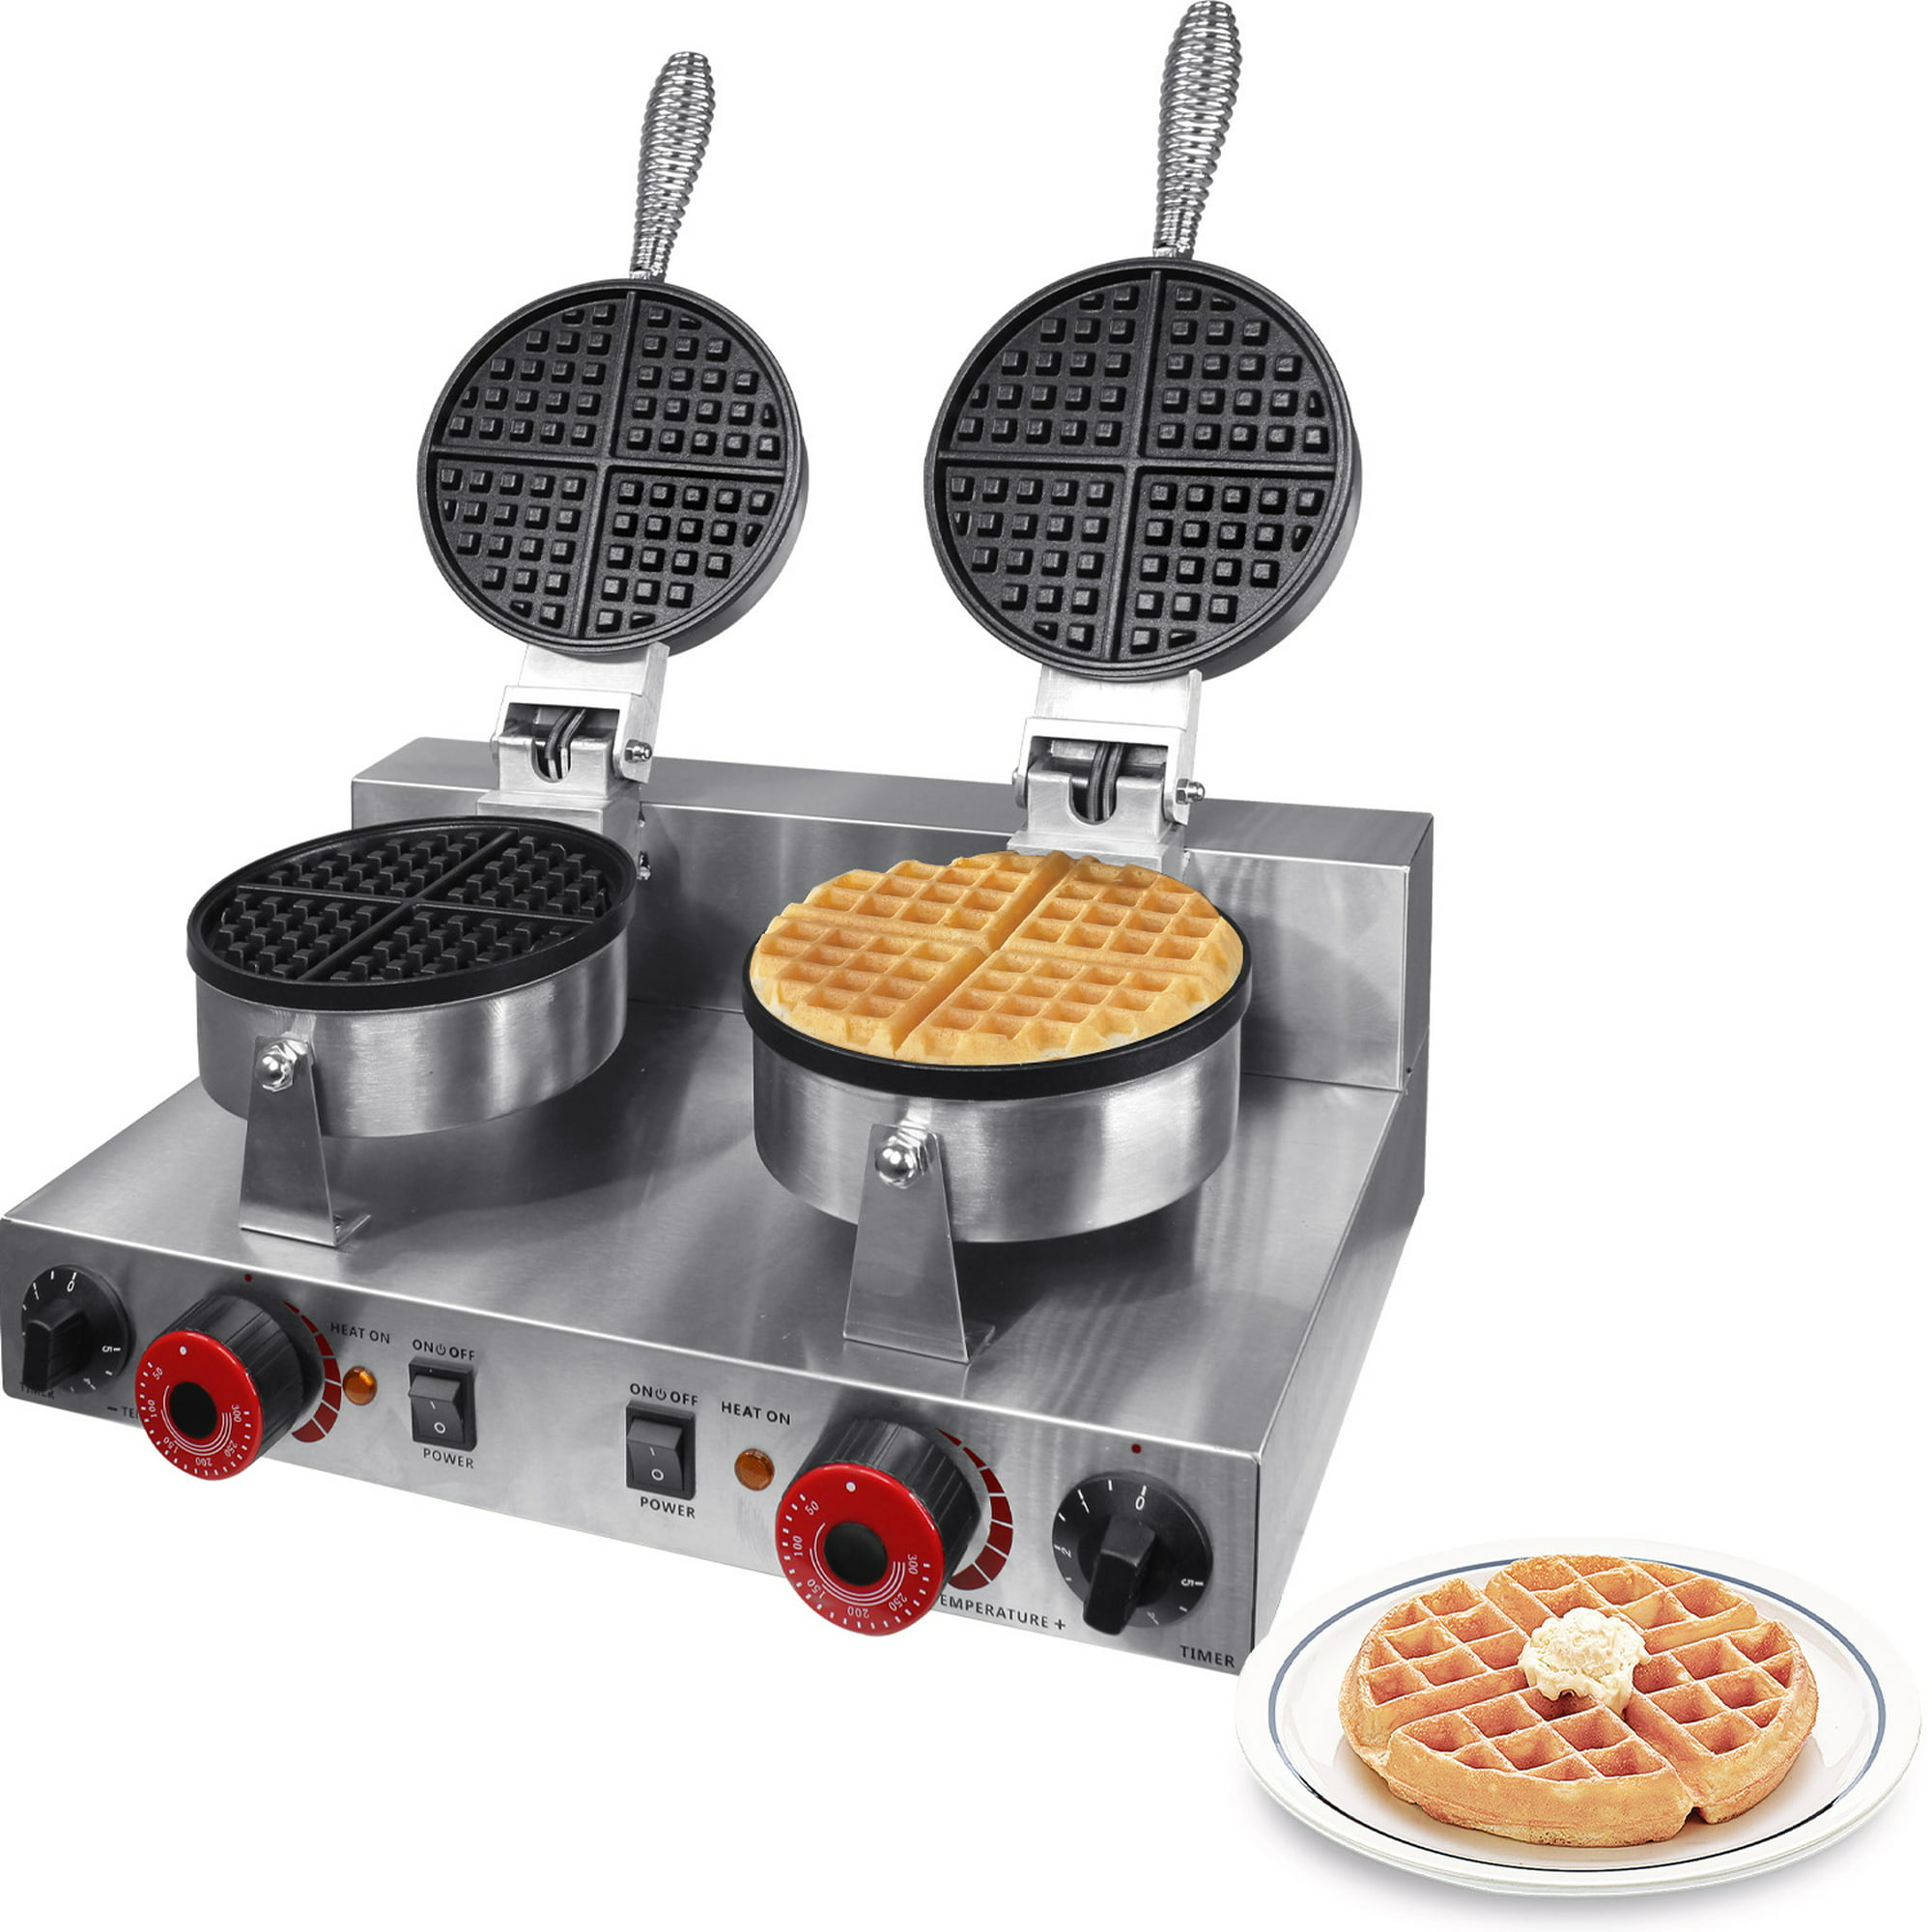 Waflera Electrica Burbujas Waffles 5 Minutos